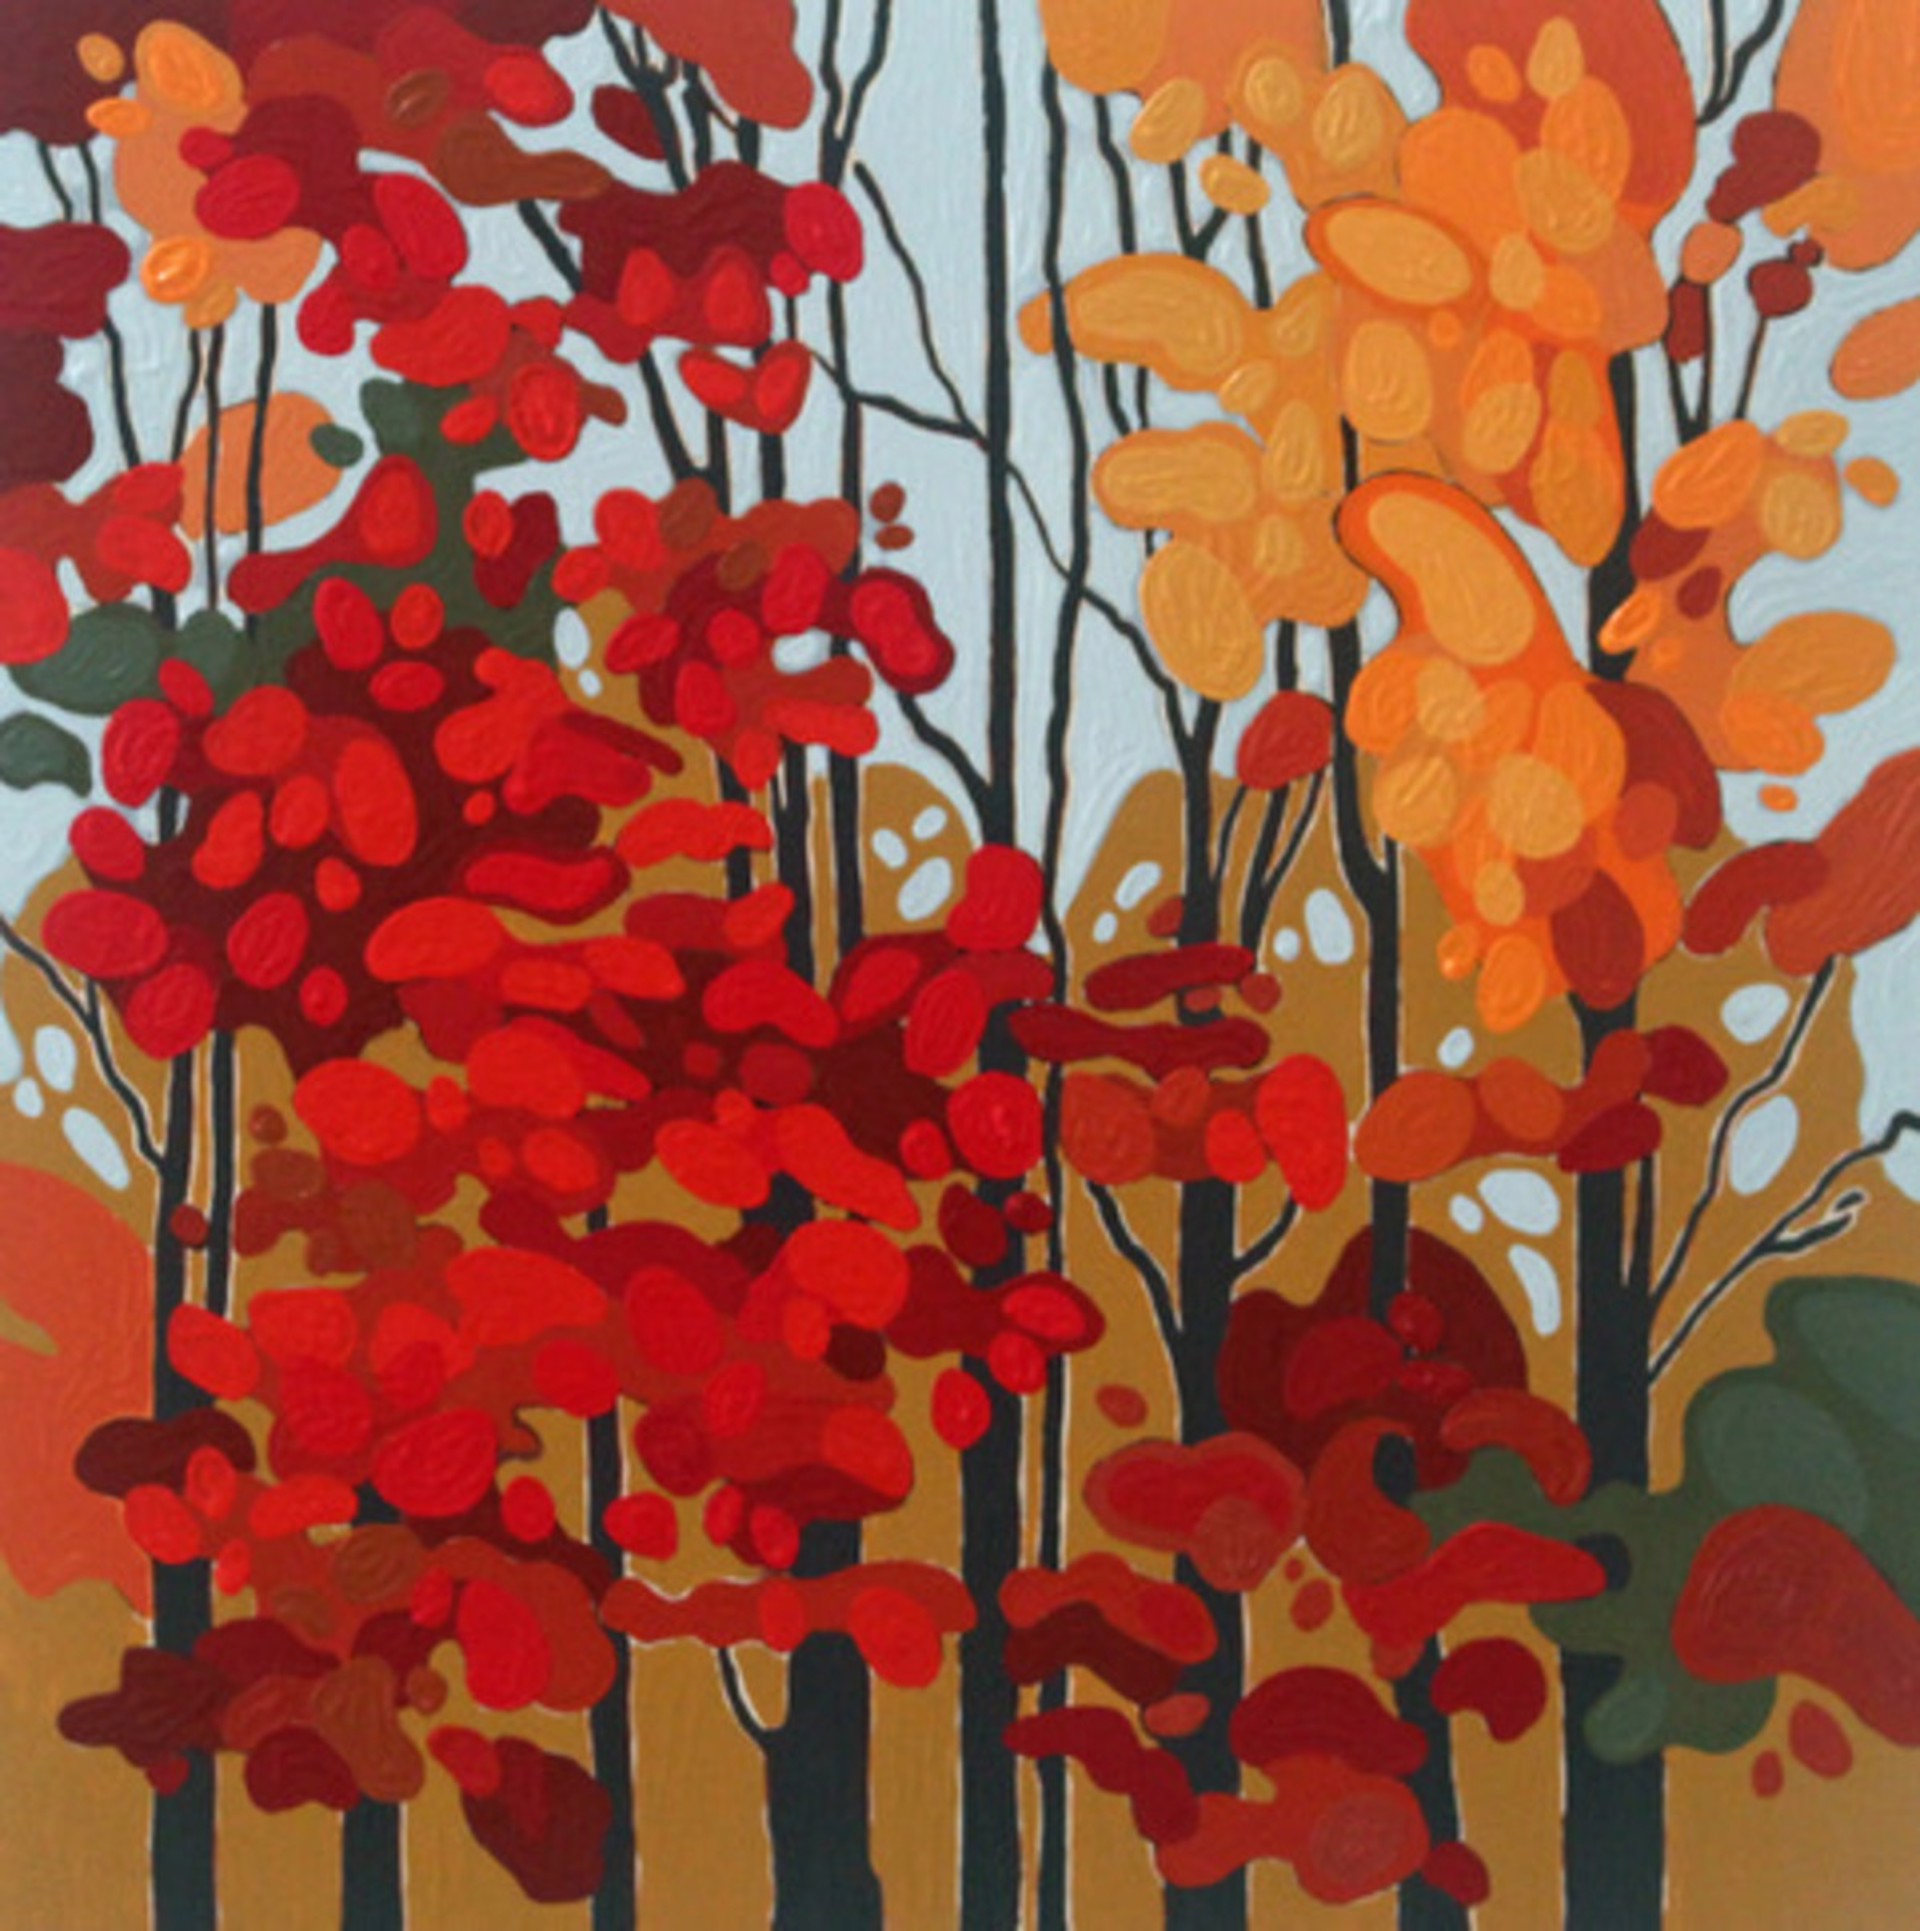 Autumn Leaves by Leanne Baird